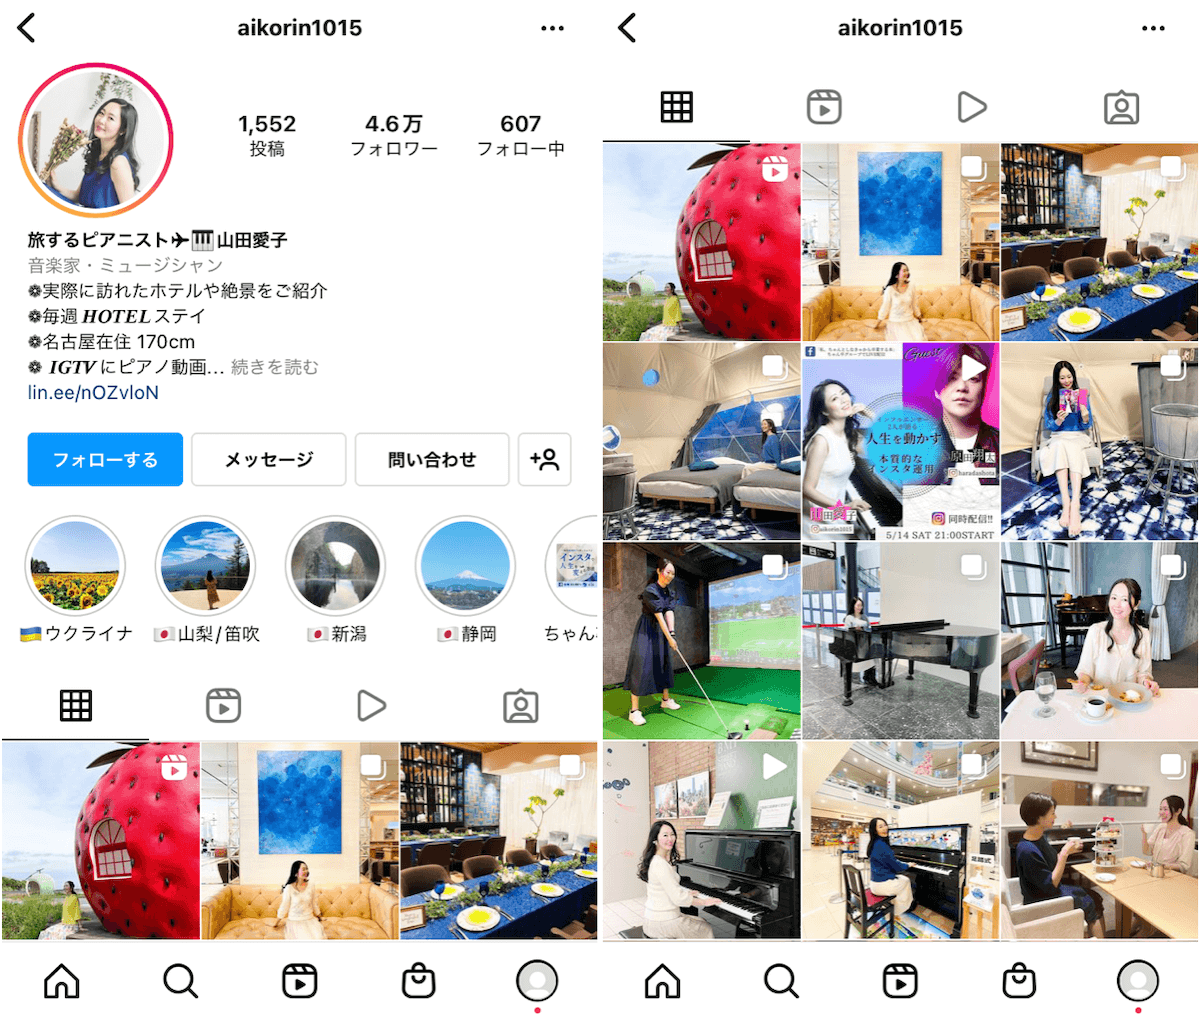 instagram-influencer-hotel-ryokan-aikorin1015